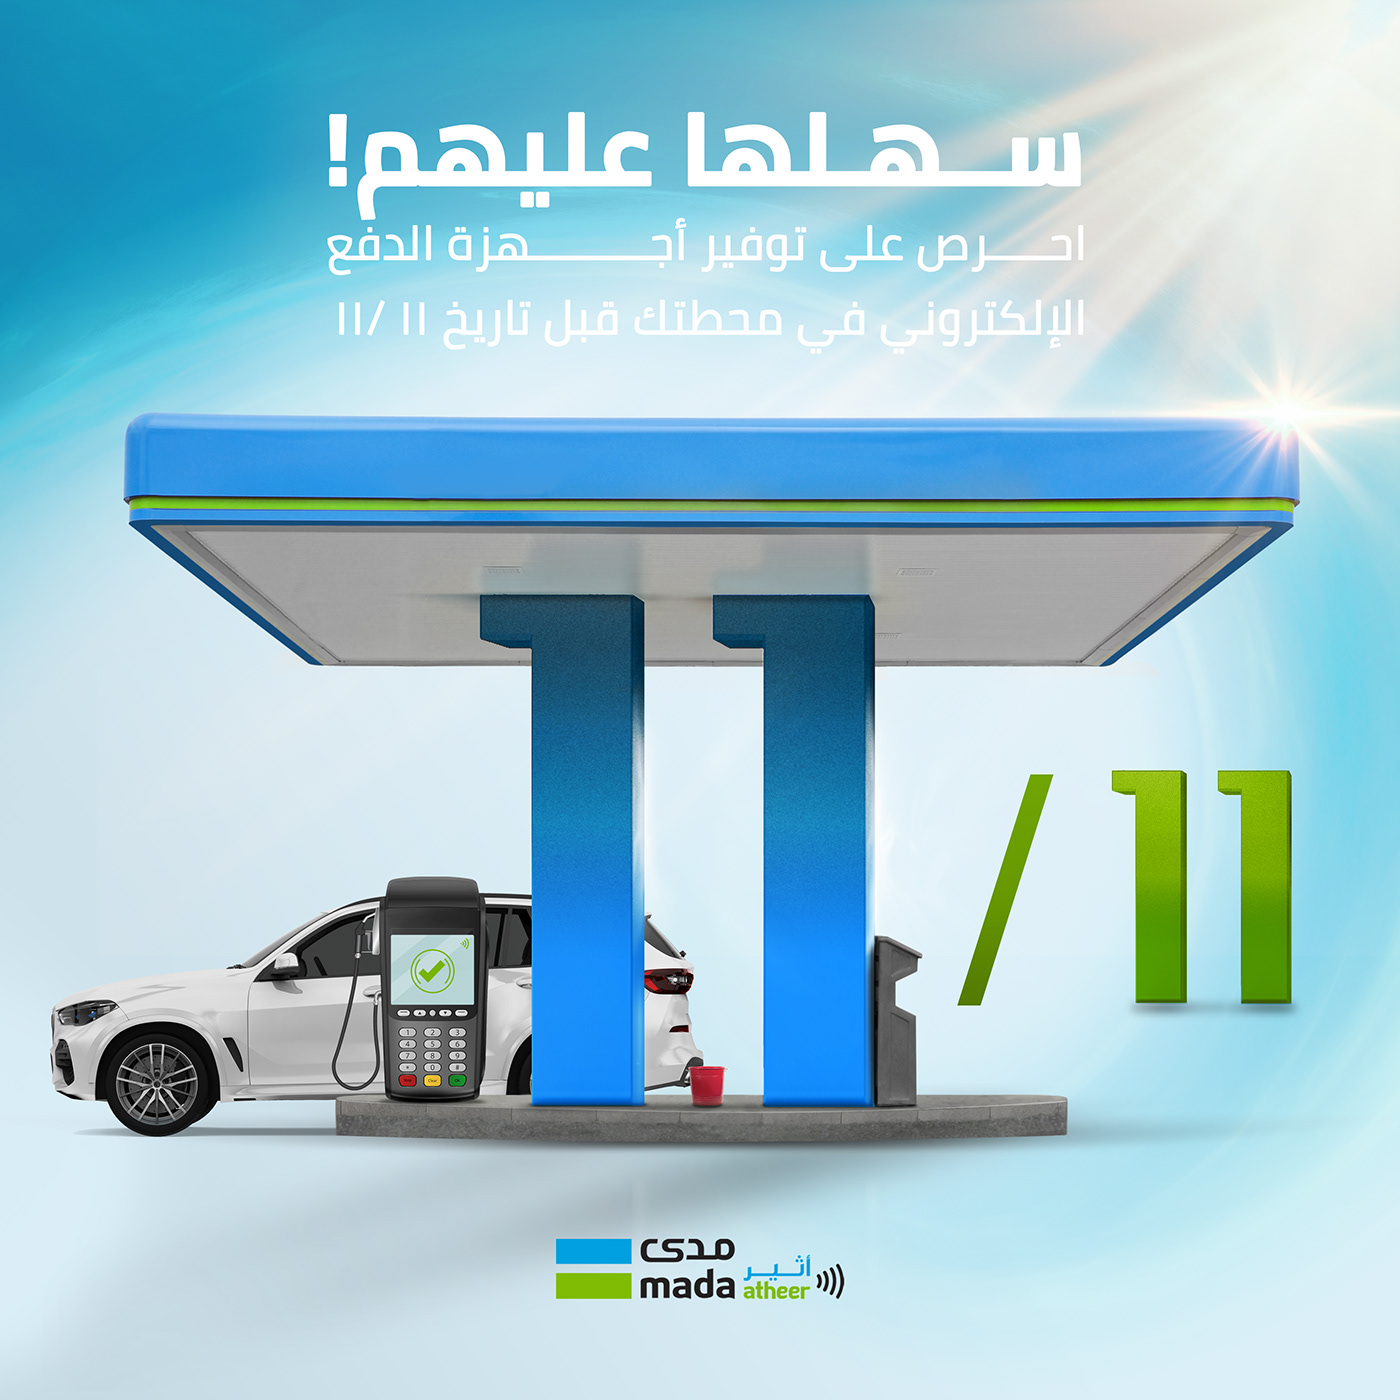 ATM campaign gas station mada payment Saudi Arabia